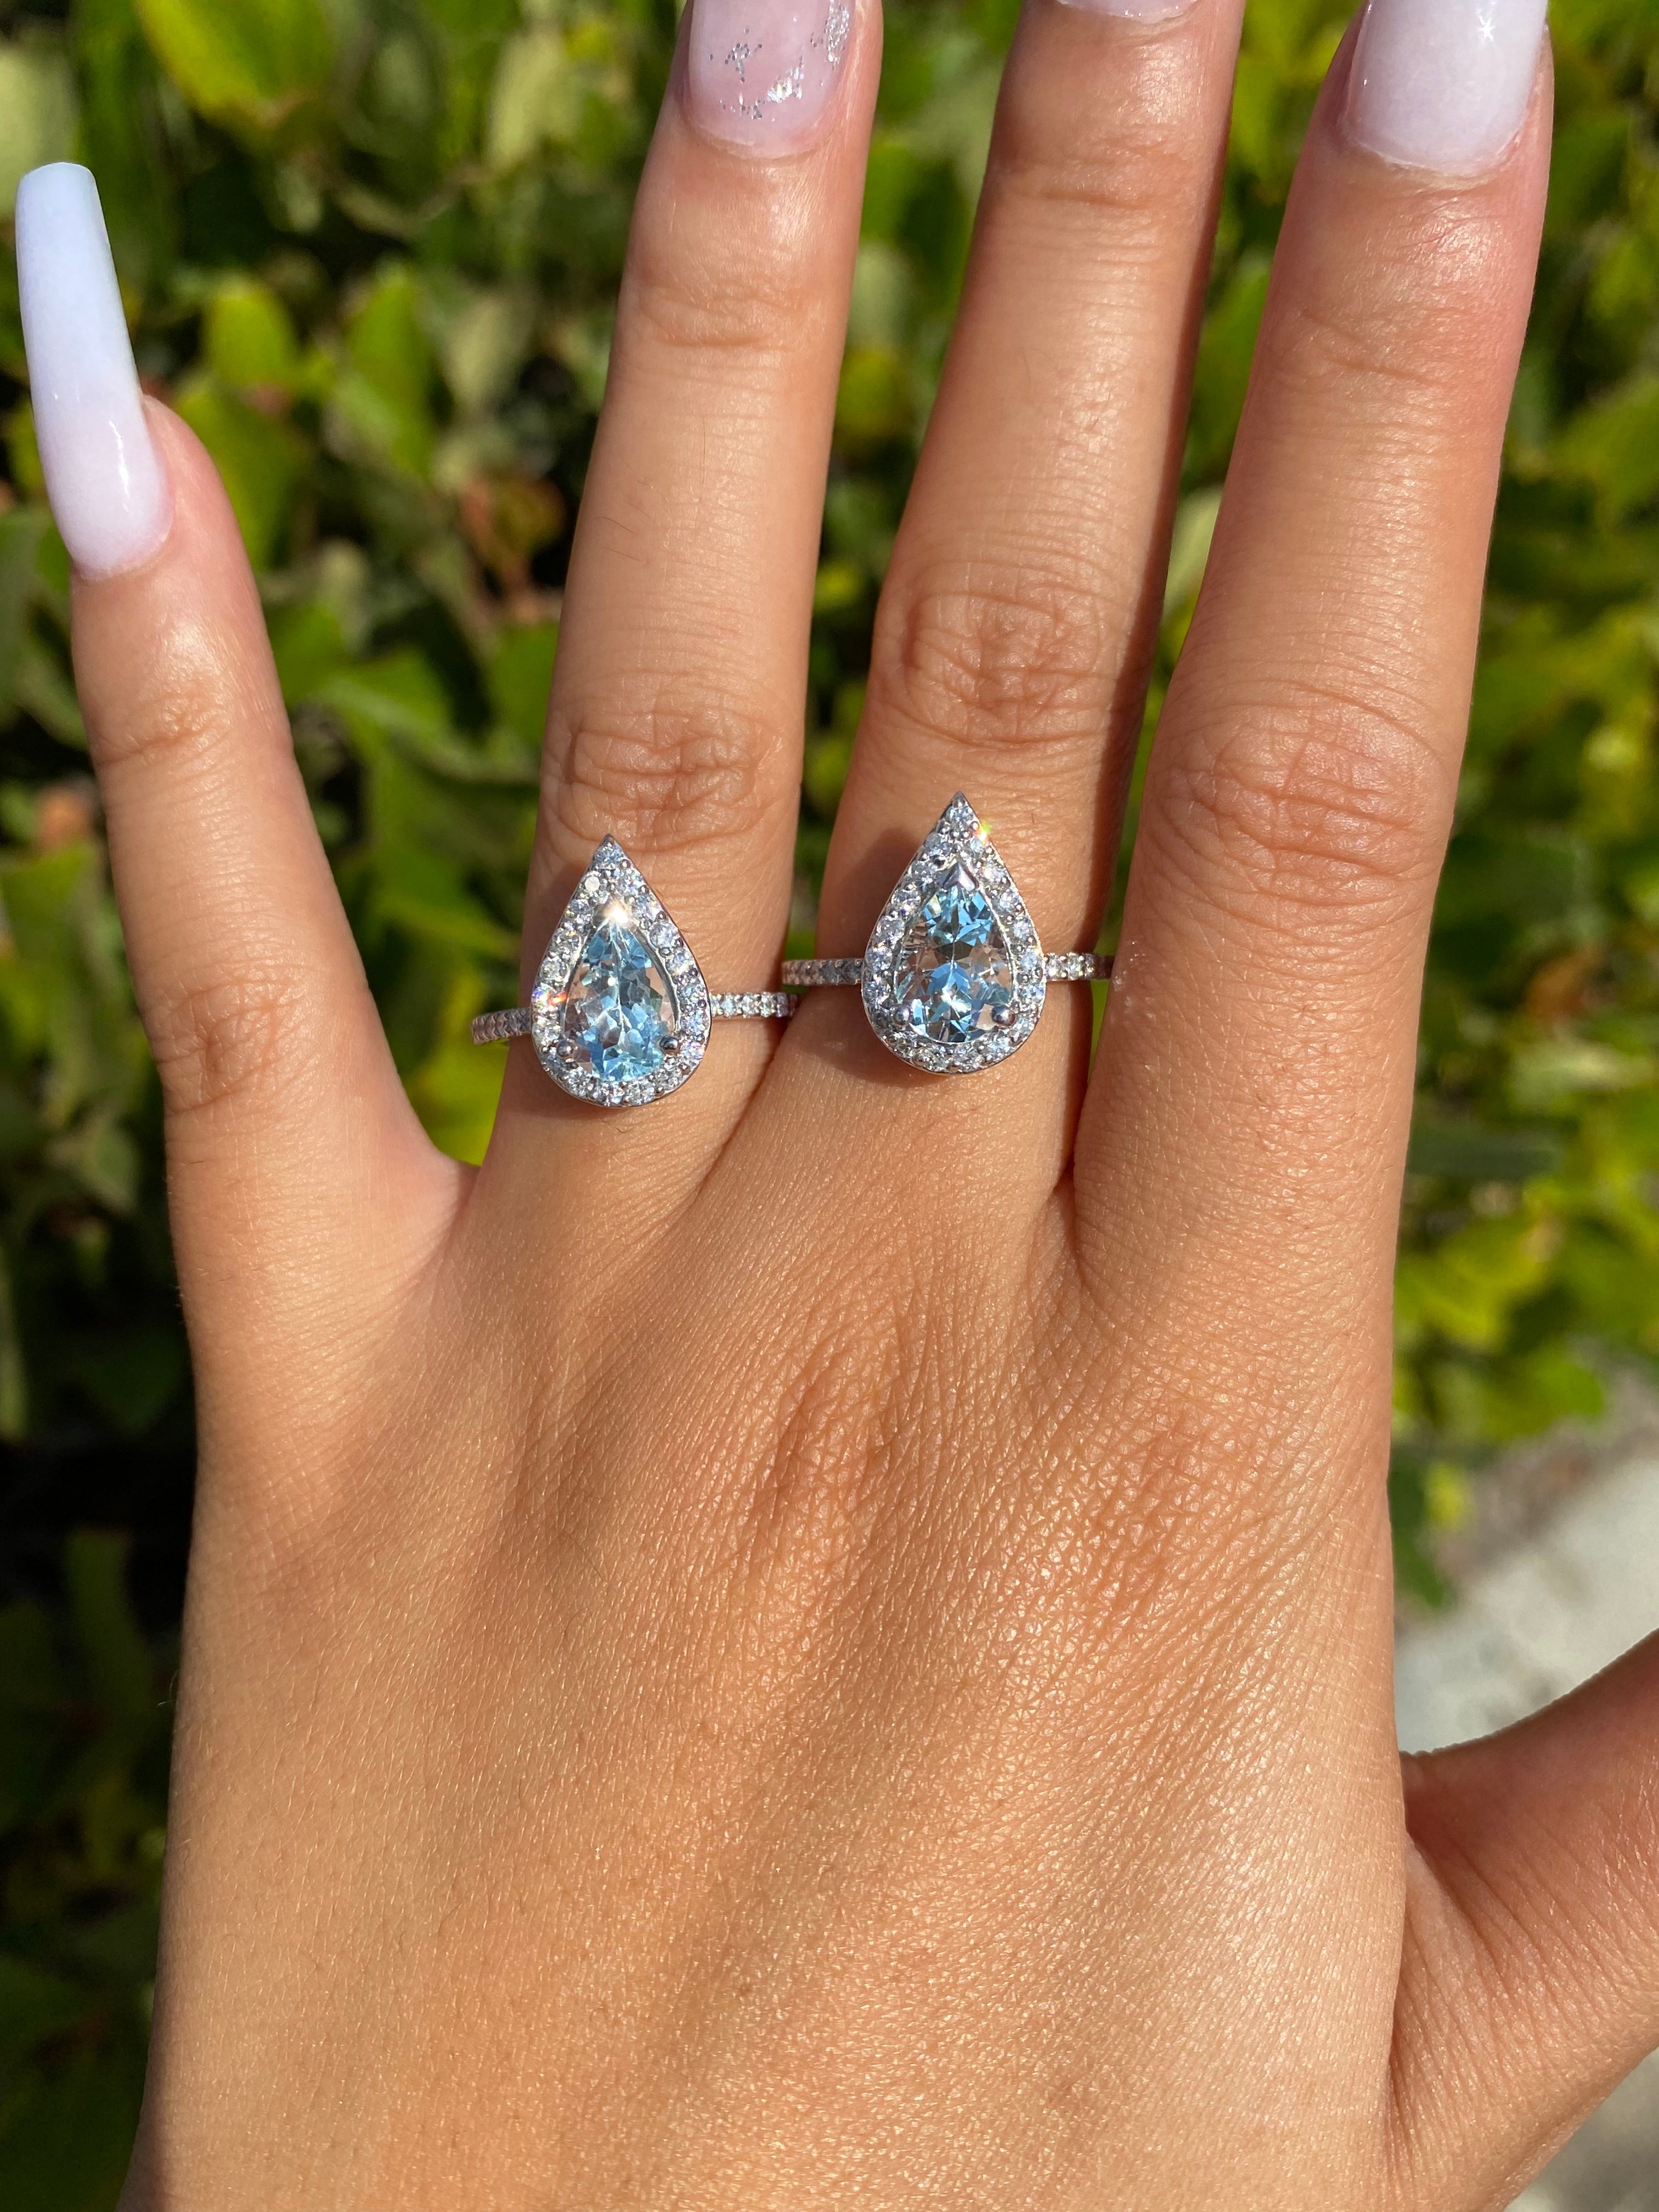 1 carat aquamarine engagement ring set, tiara shape gold ring with diamonds  / Ariadne | Eden Garden Jewelry™